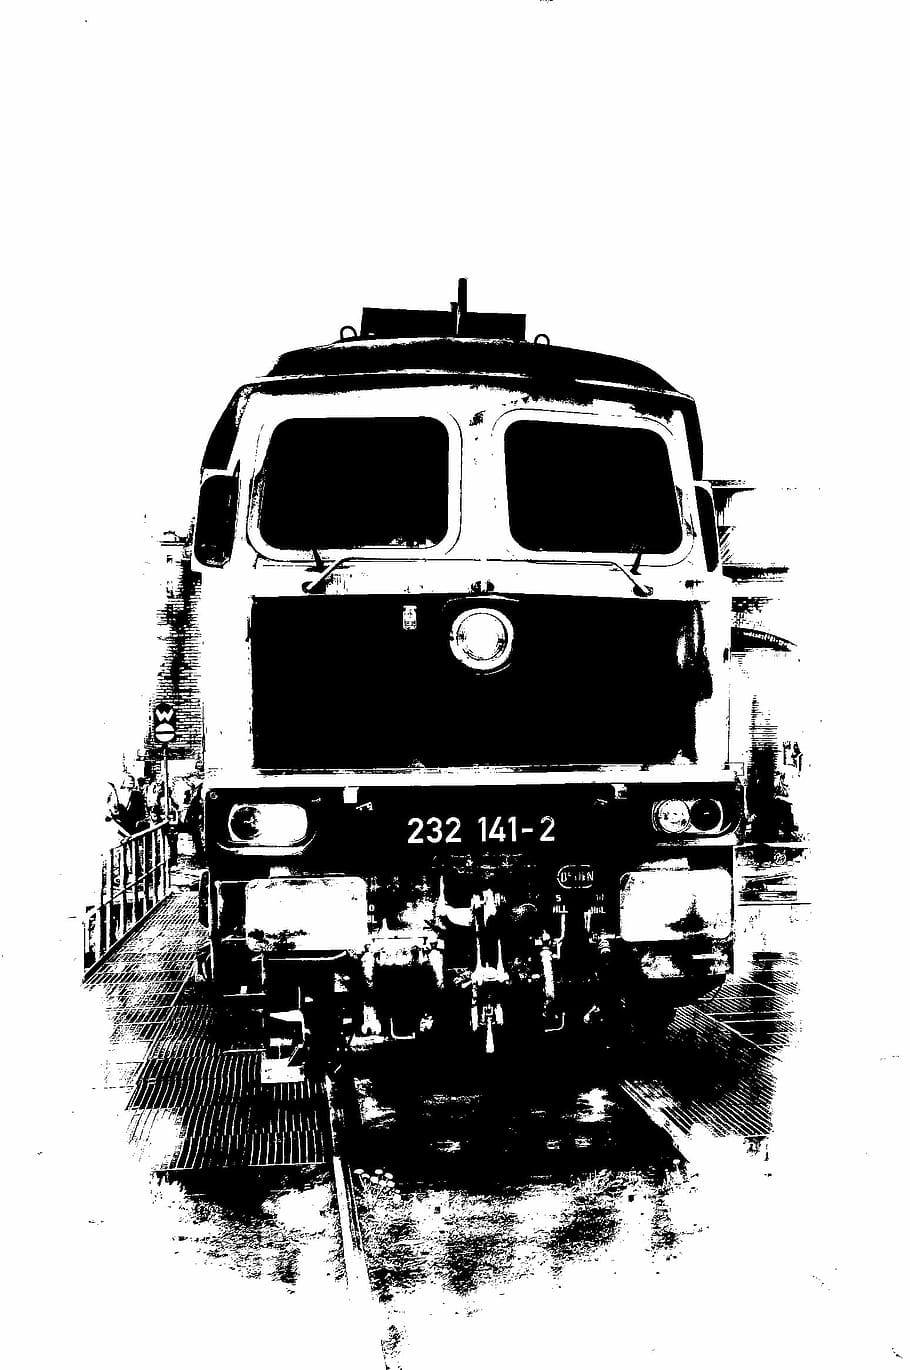 Lokomotif Diesel, Monokrom, Kereta Api, transportasi, lalu lintas kereta api, kendaraan, alat transportasi umum, hitam dan putih, rel kereta api, kereta uap